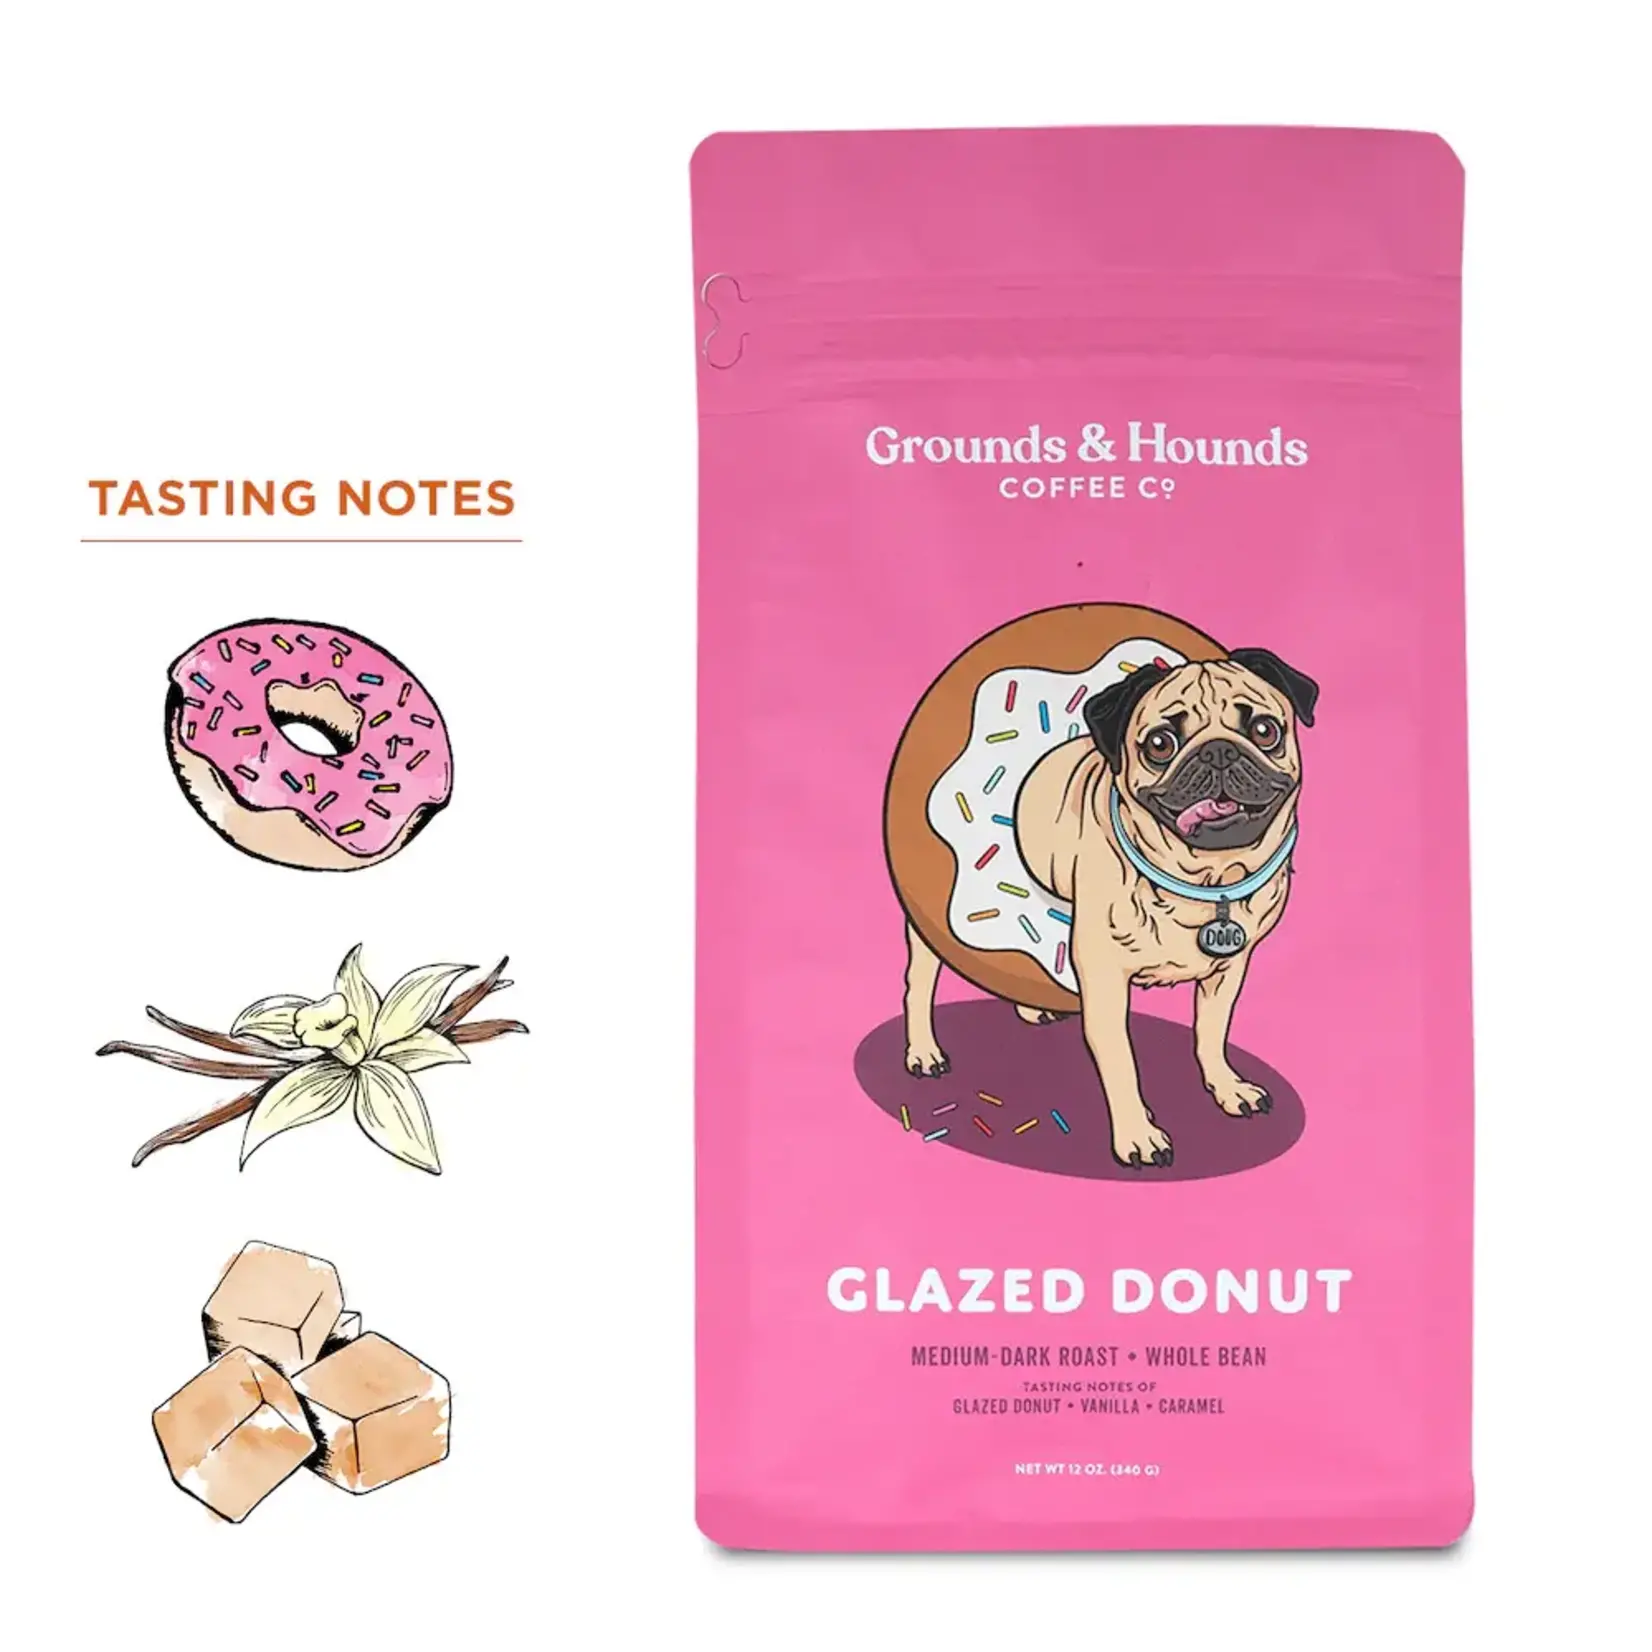 Grounds & Hounds Grounds & Hounds Glazed Donut Coffee 12oz